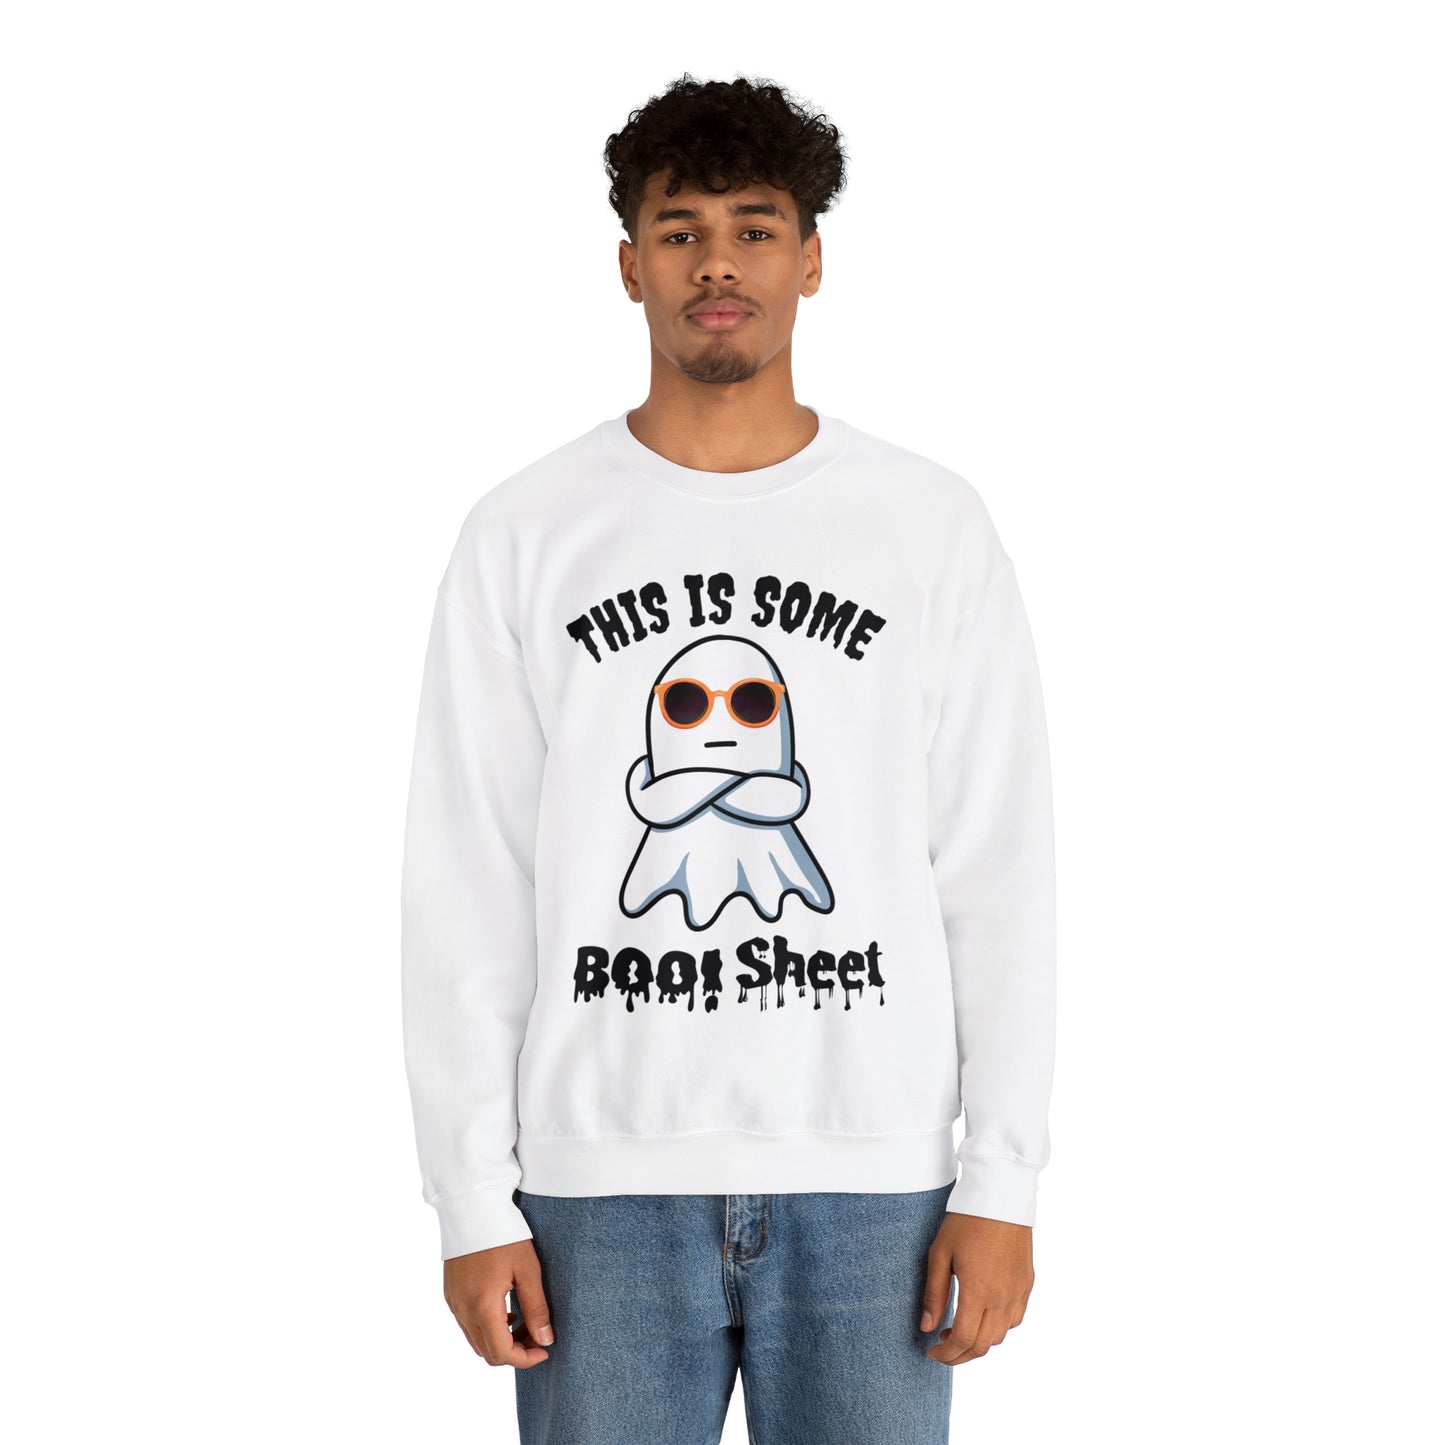 This Is Some Boo Sheet Funny HalloweenSweatshirt Funny Halloween Costume Spooky Season Tee Boo Ghost Sweatshirt Gift for Birthday Christmas